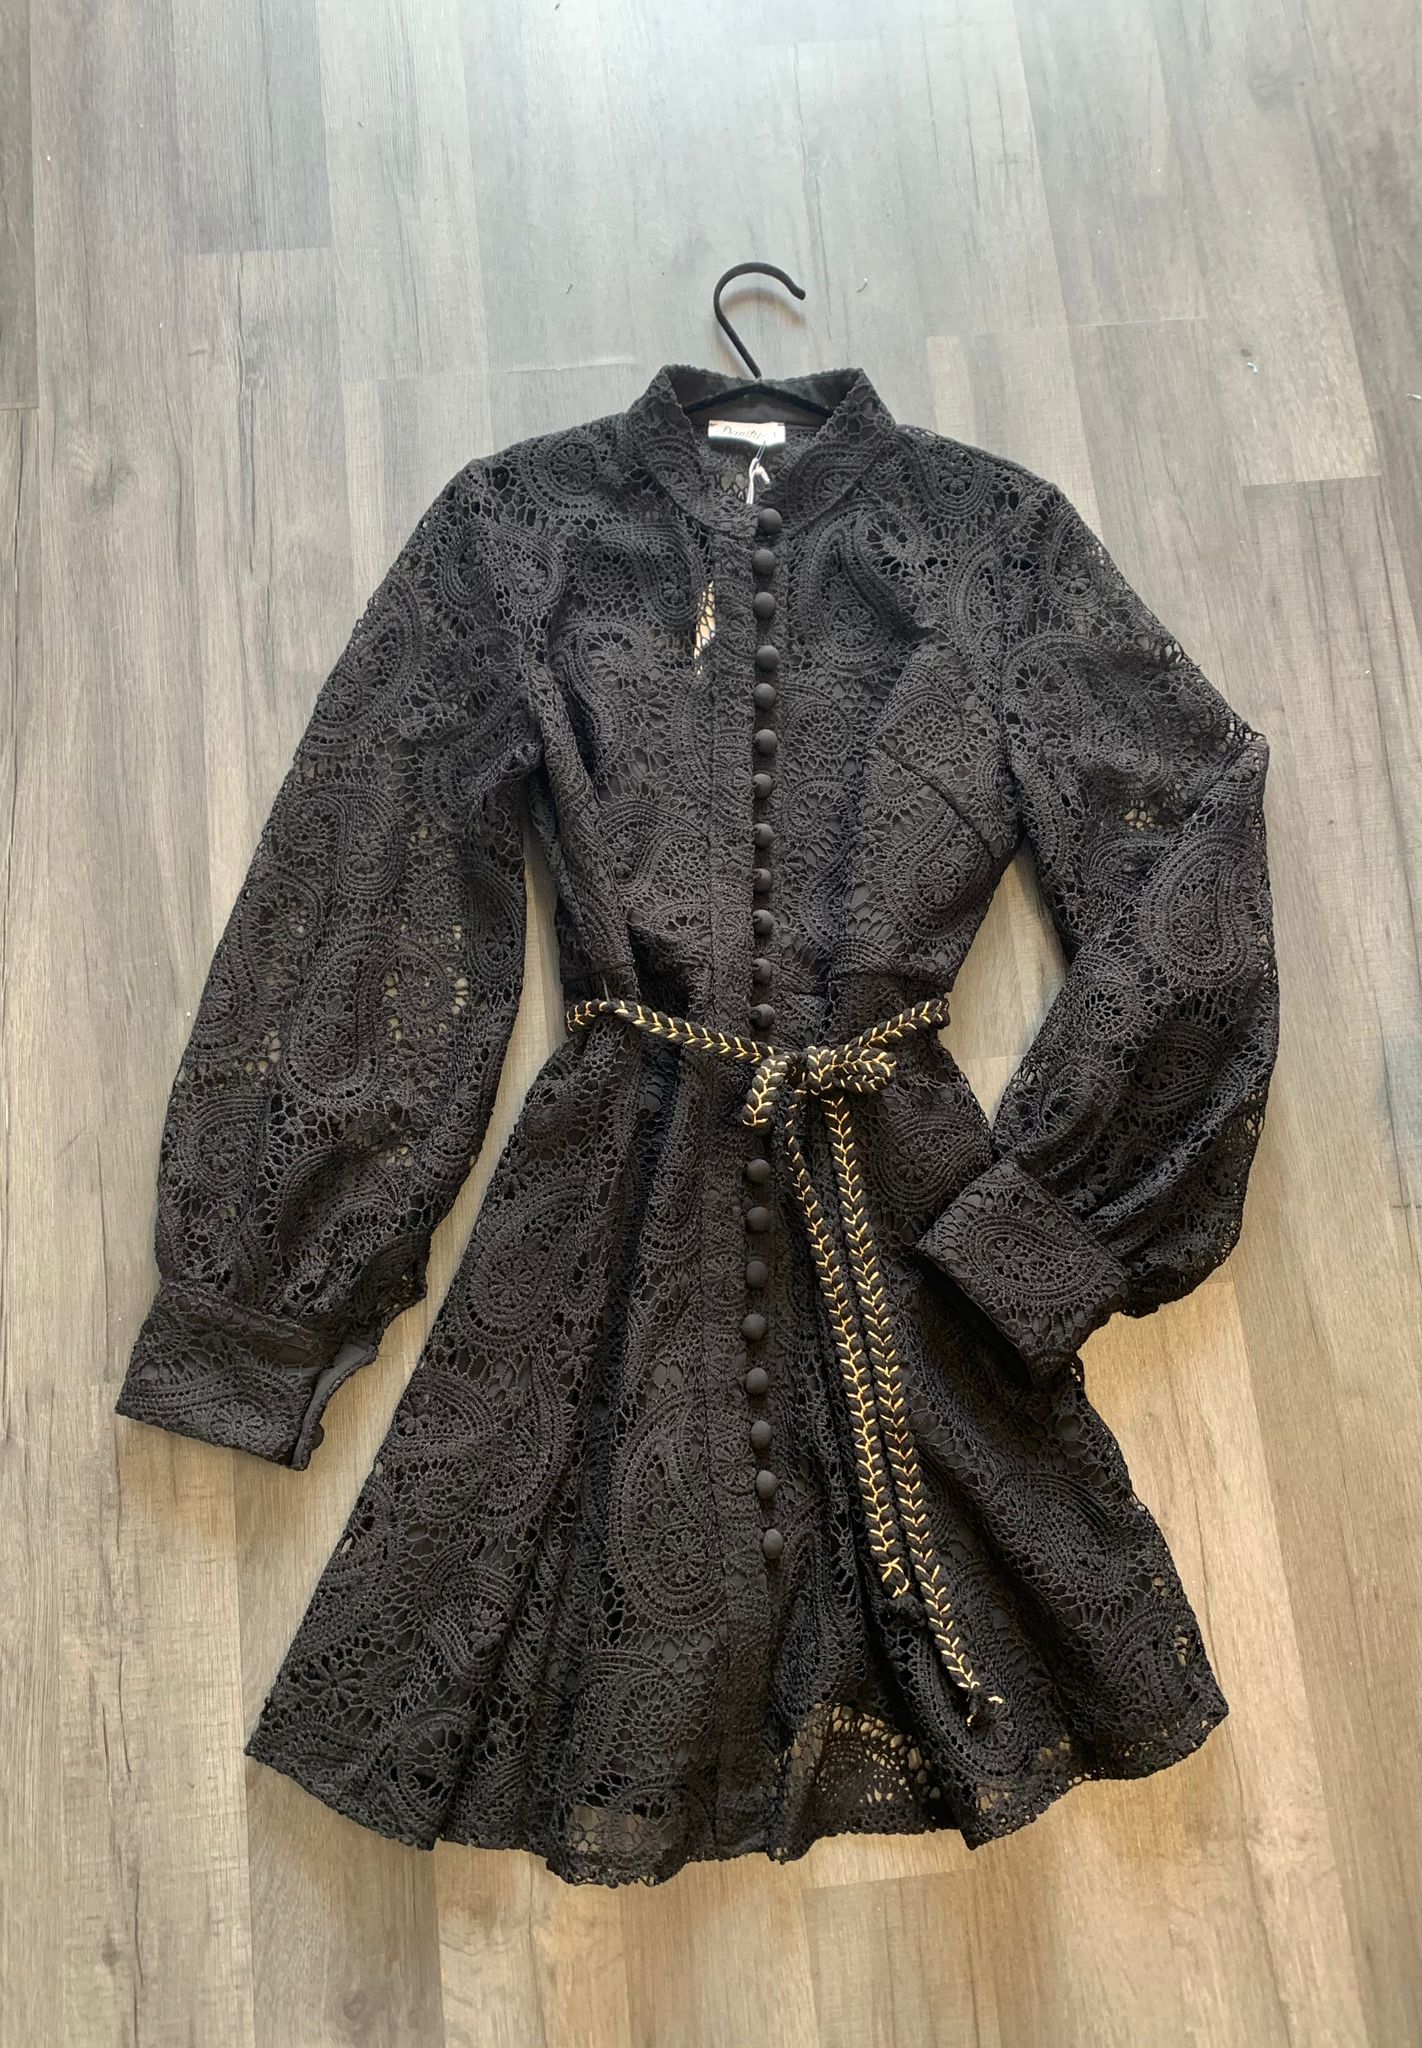 Black lacey dress